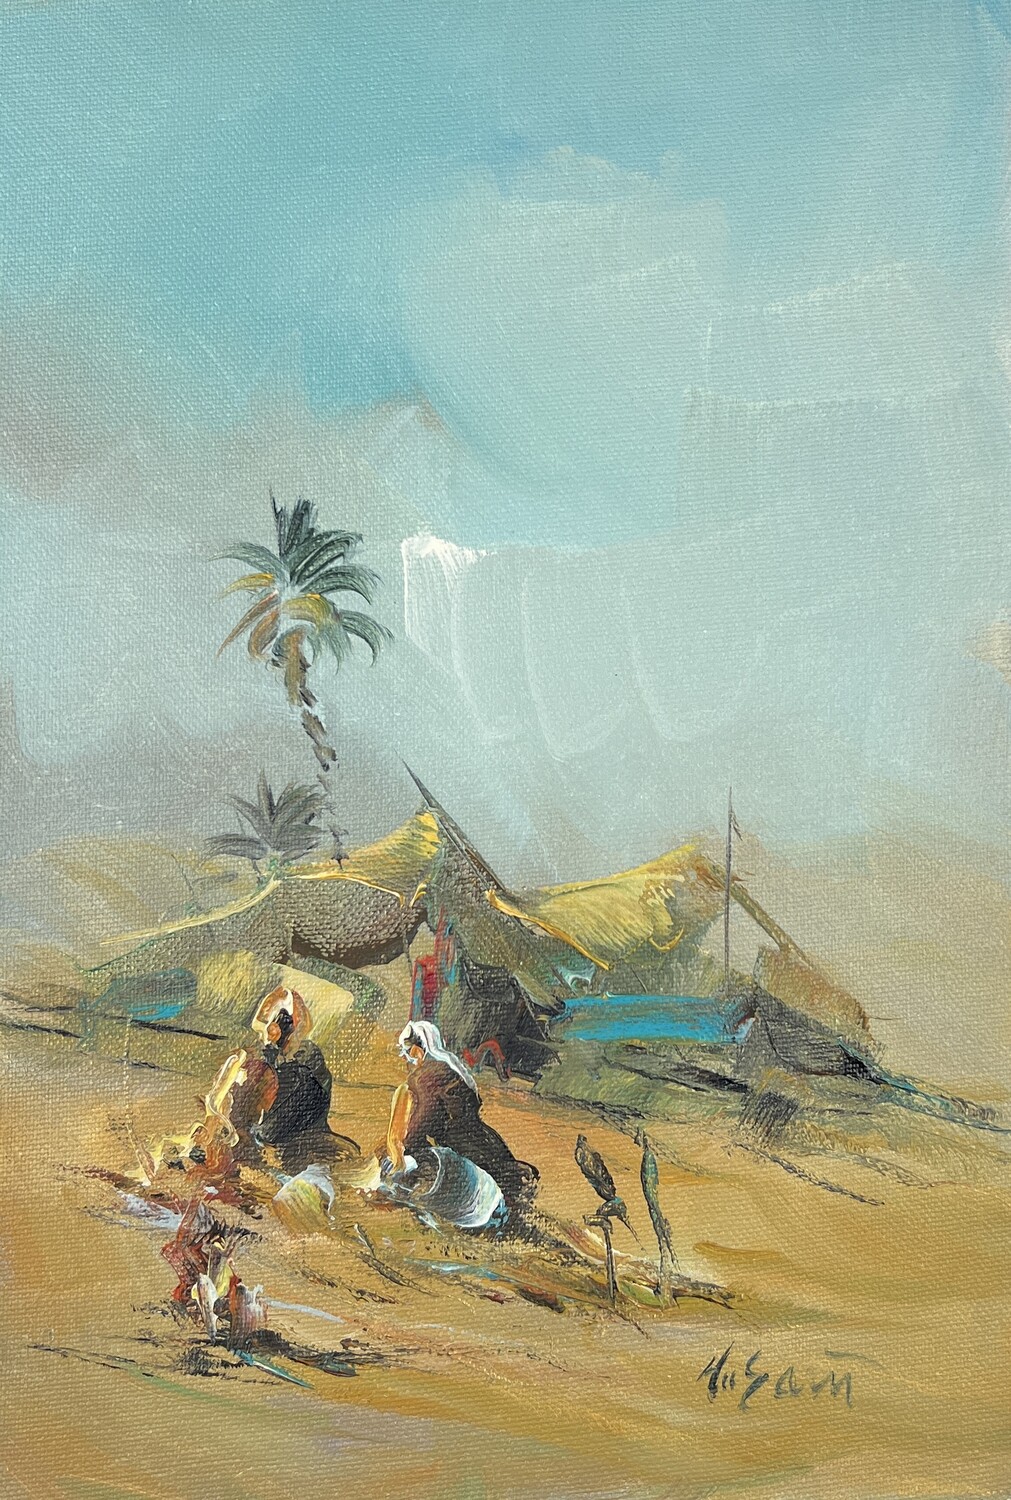 Bedouin Couple & Tent - Knife Art Oil Painting